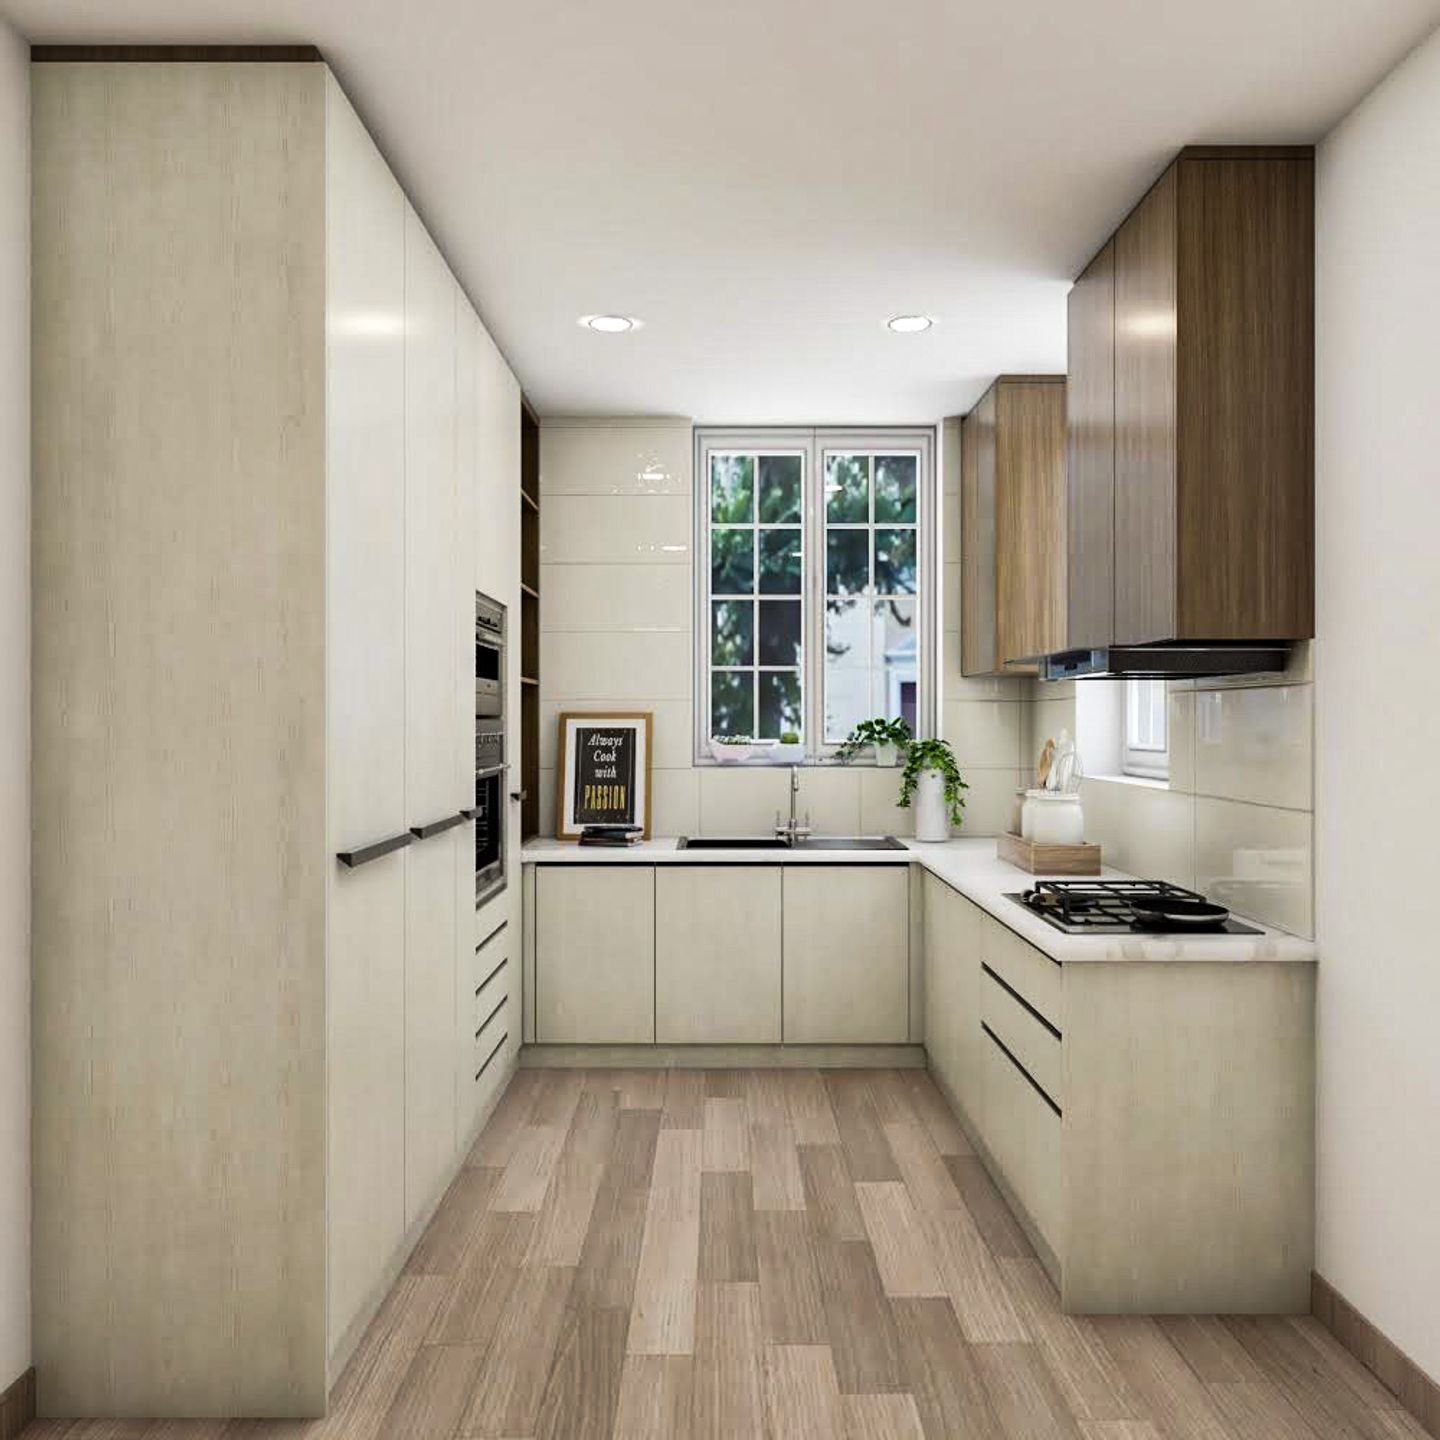 U-Shaped Beige And Wood Modular Kitchen Design - Livspace